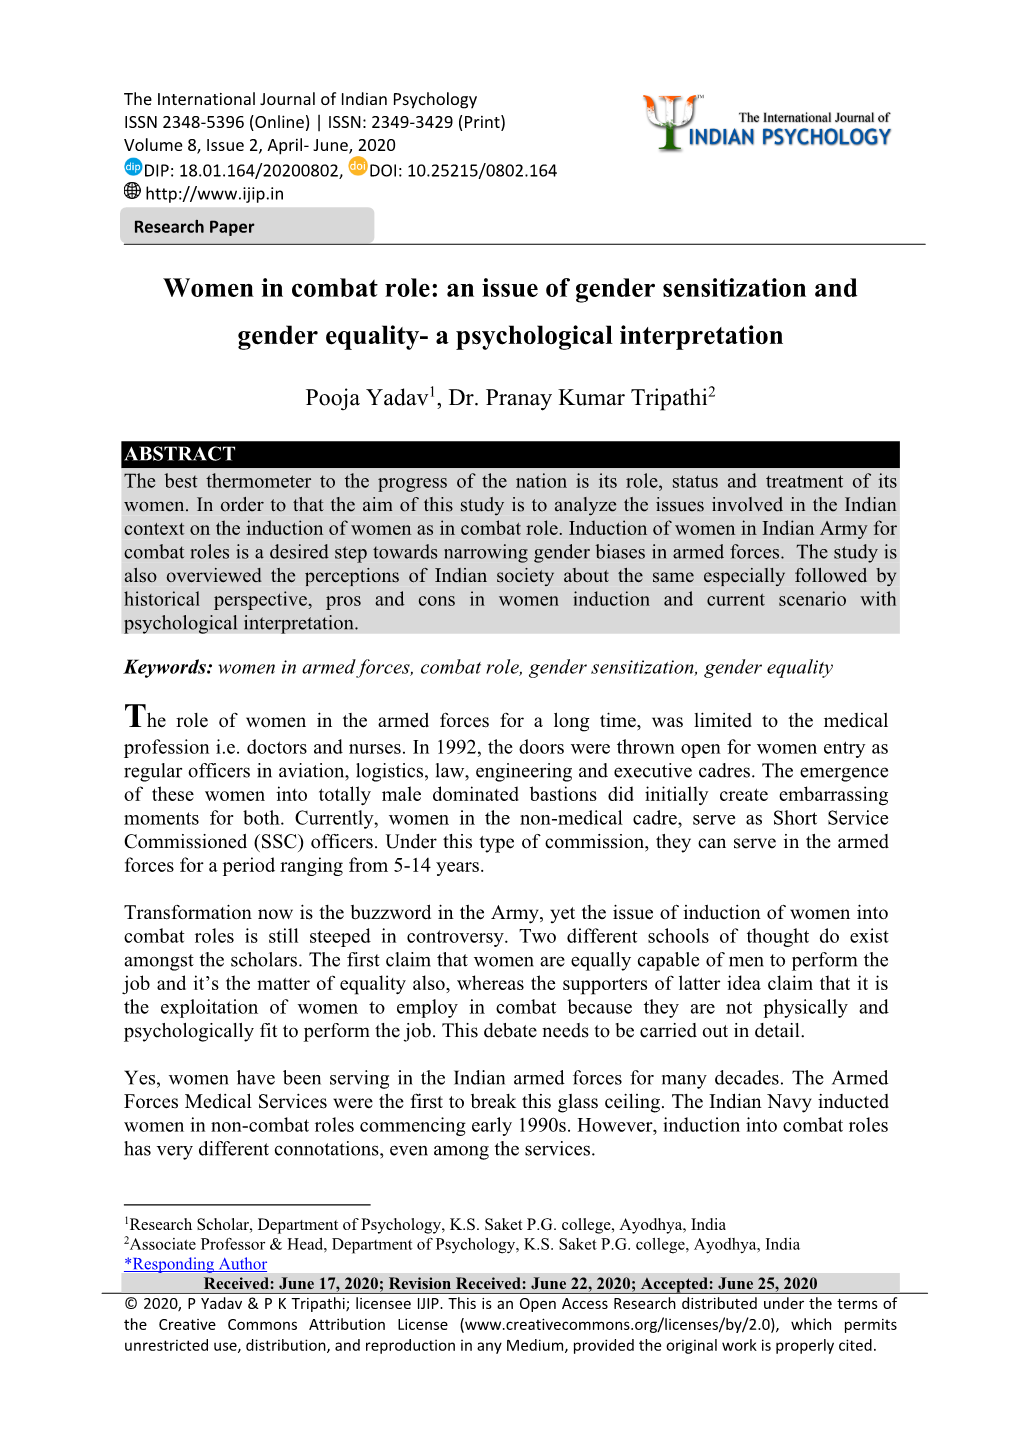 An Issue of Gender Sensitization and Gender Equality- a Psychological Interpretation